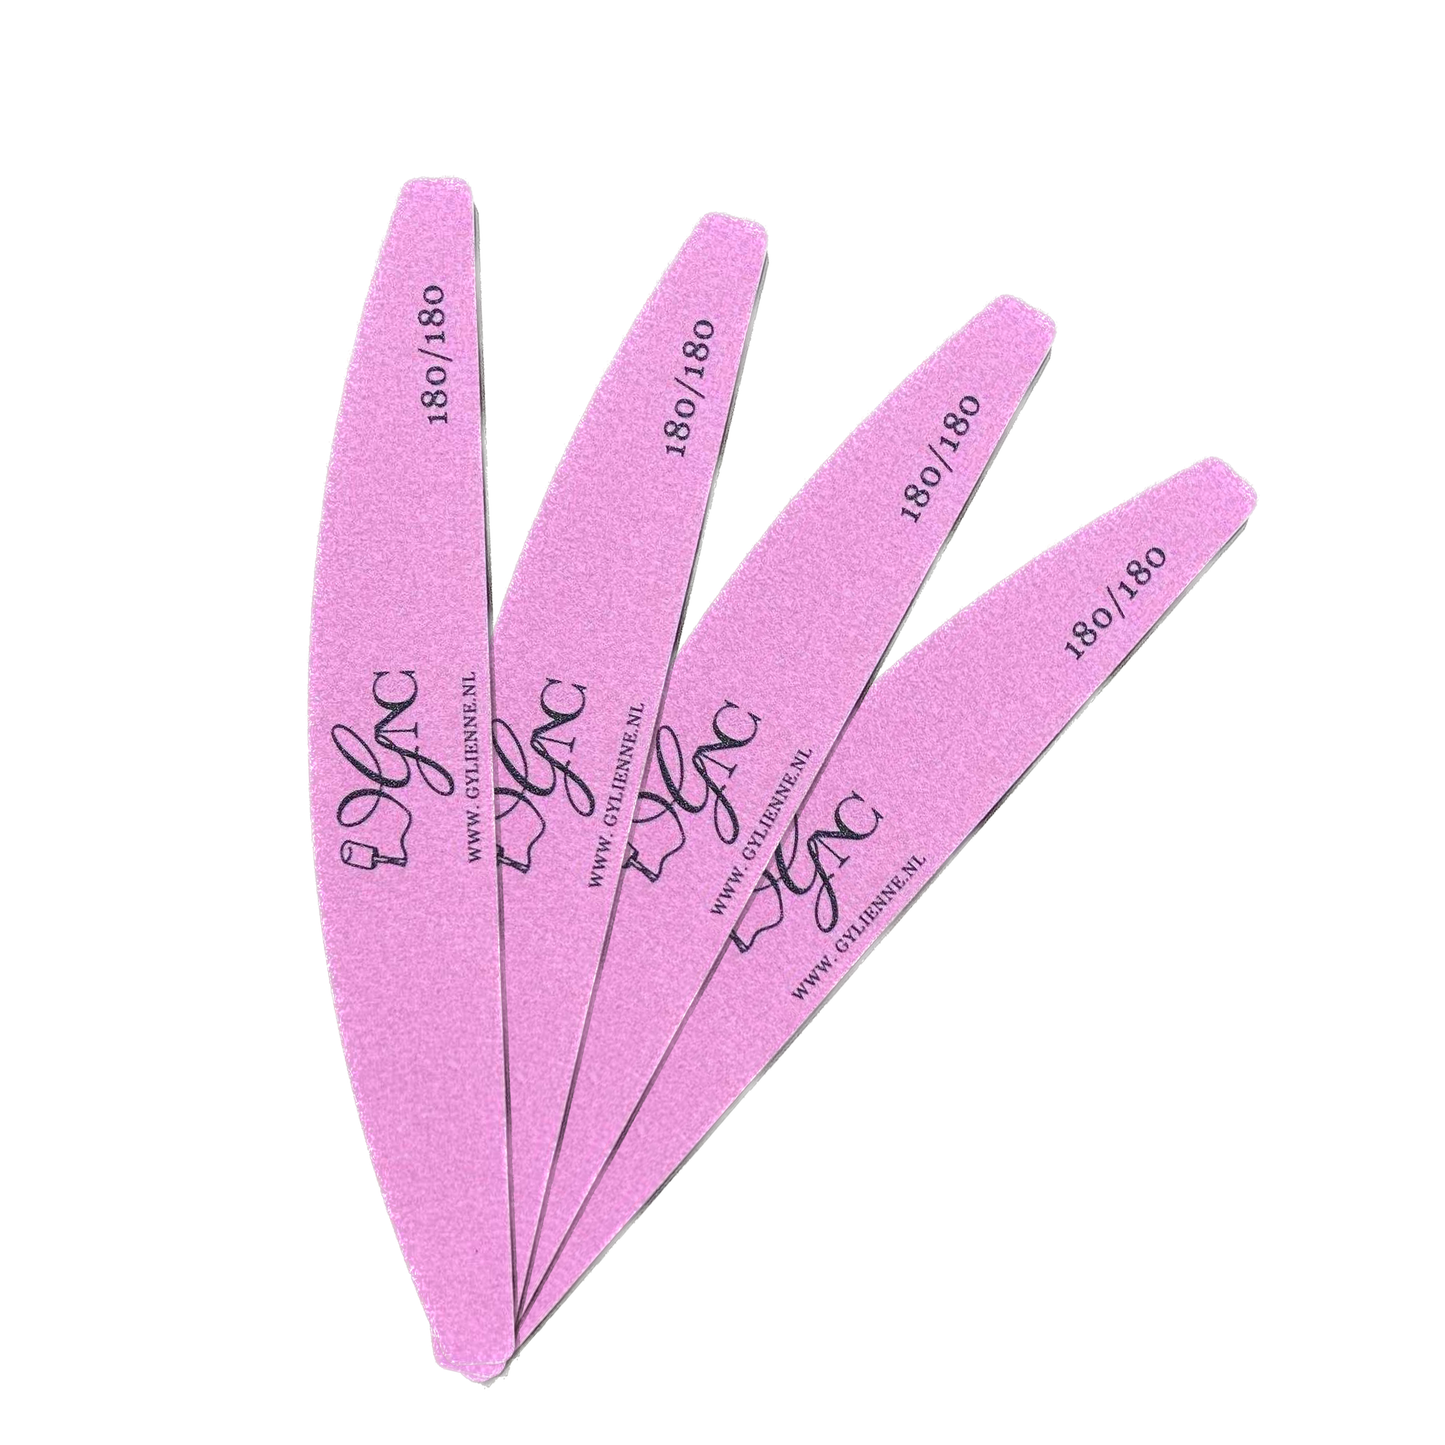 GNC Roze manicure vijl 180/180 1 of 25 stuks